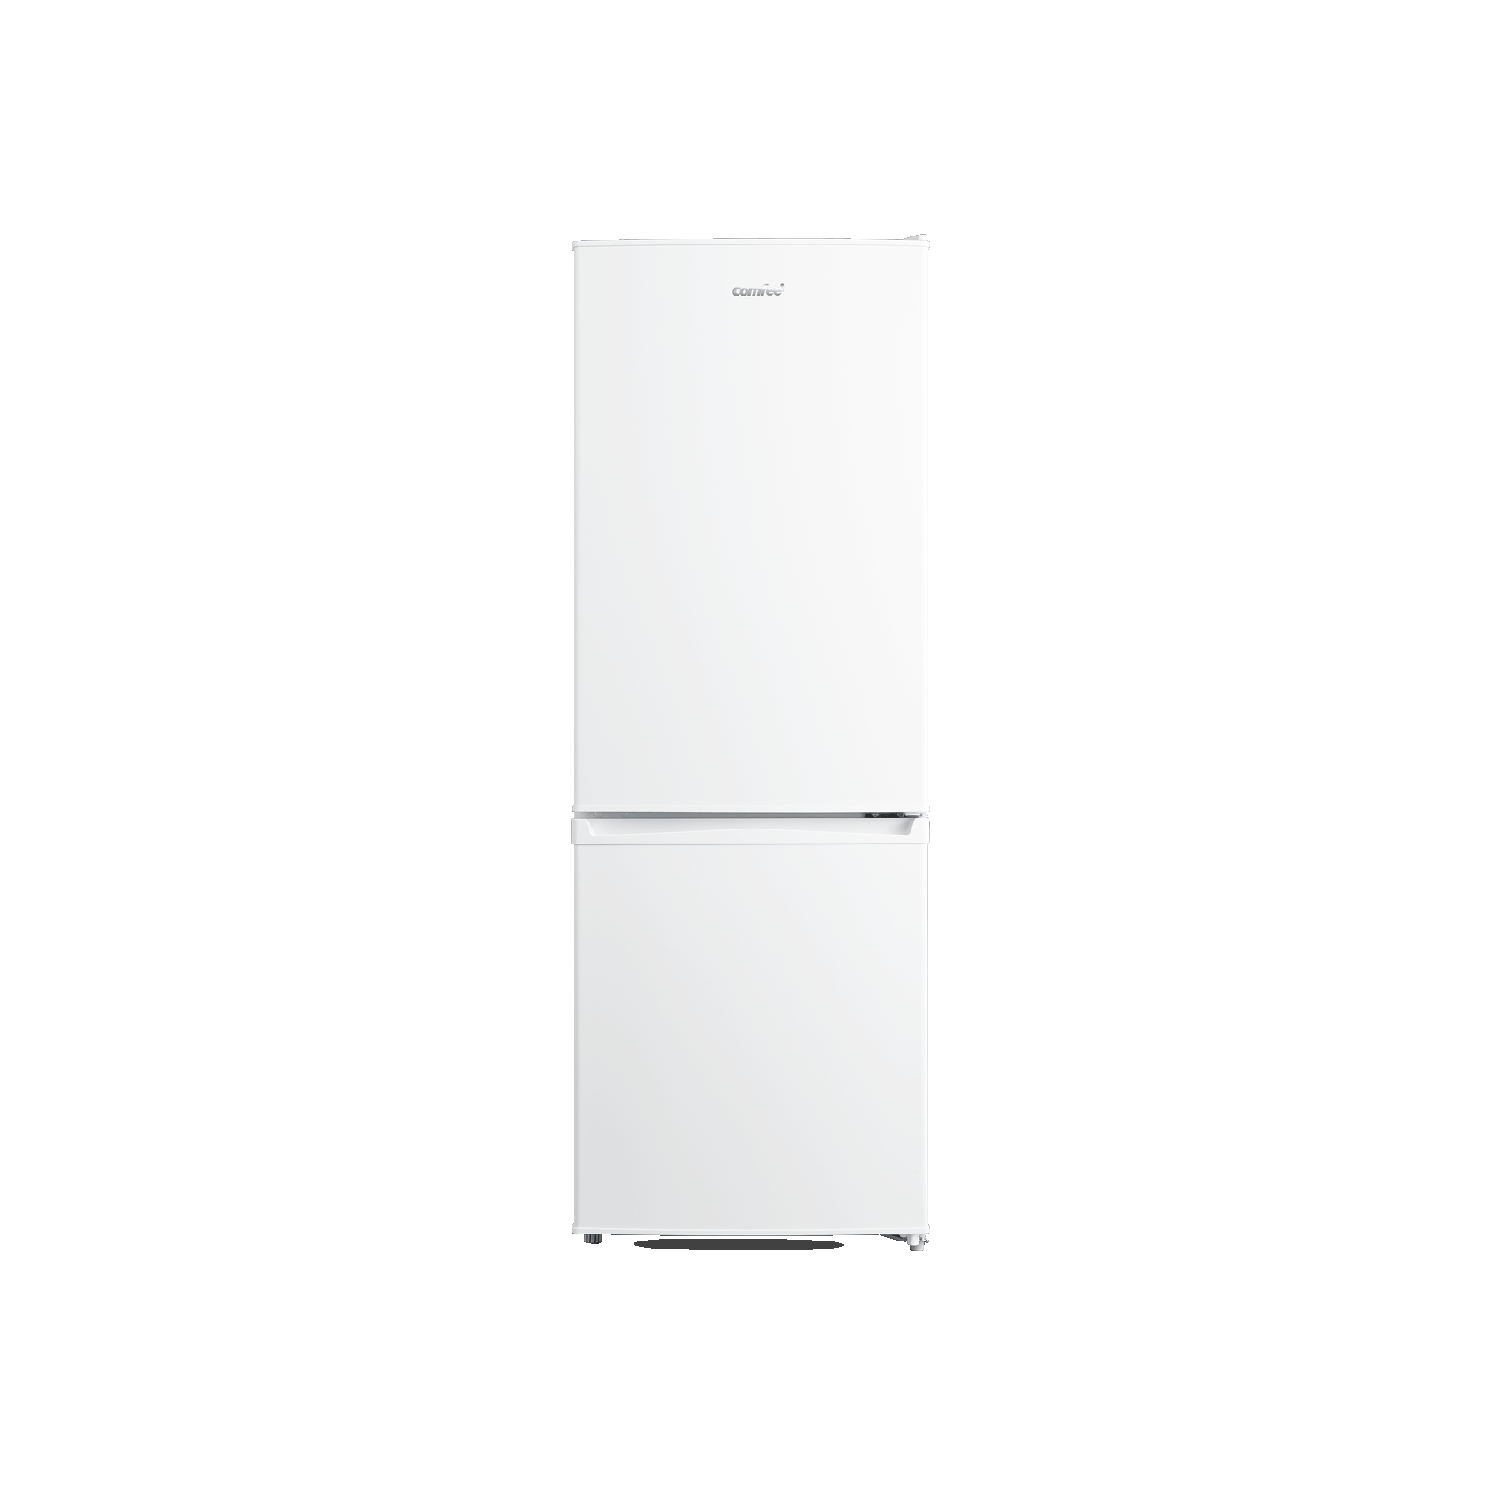 COMFEE' RCT87BL1(E) Under Counter Fridge Freezer, 87L Small Fridge Freezer  with LED Light, Removable Shelves, Adjustable Thermostats and Legs, Black